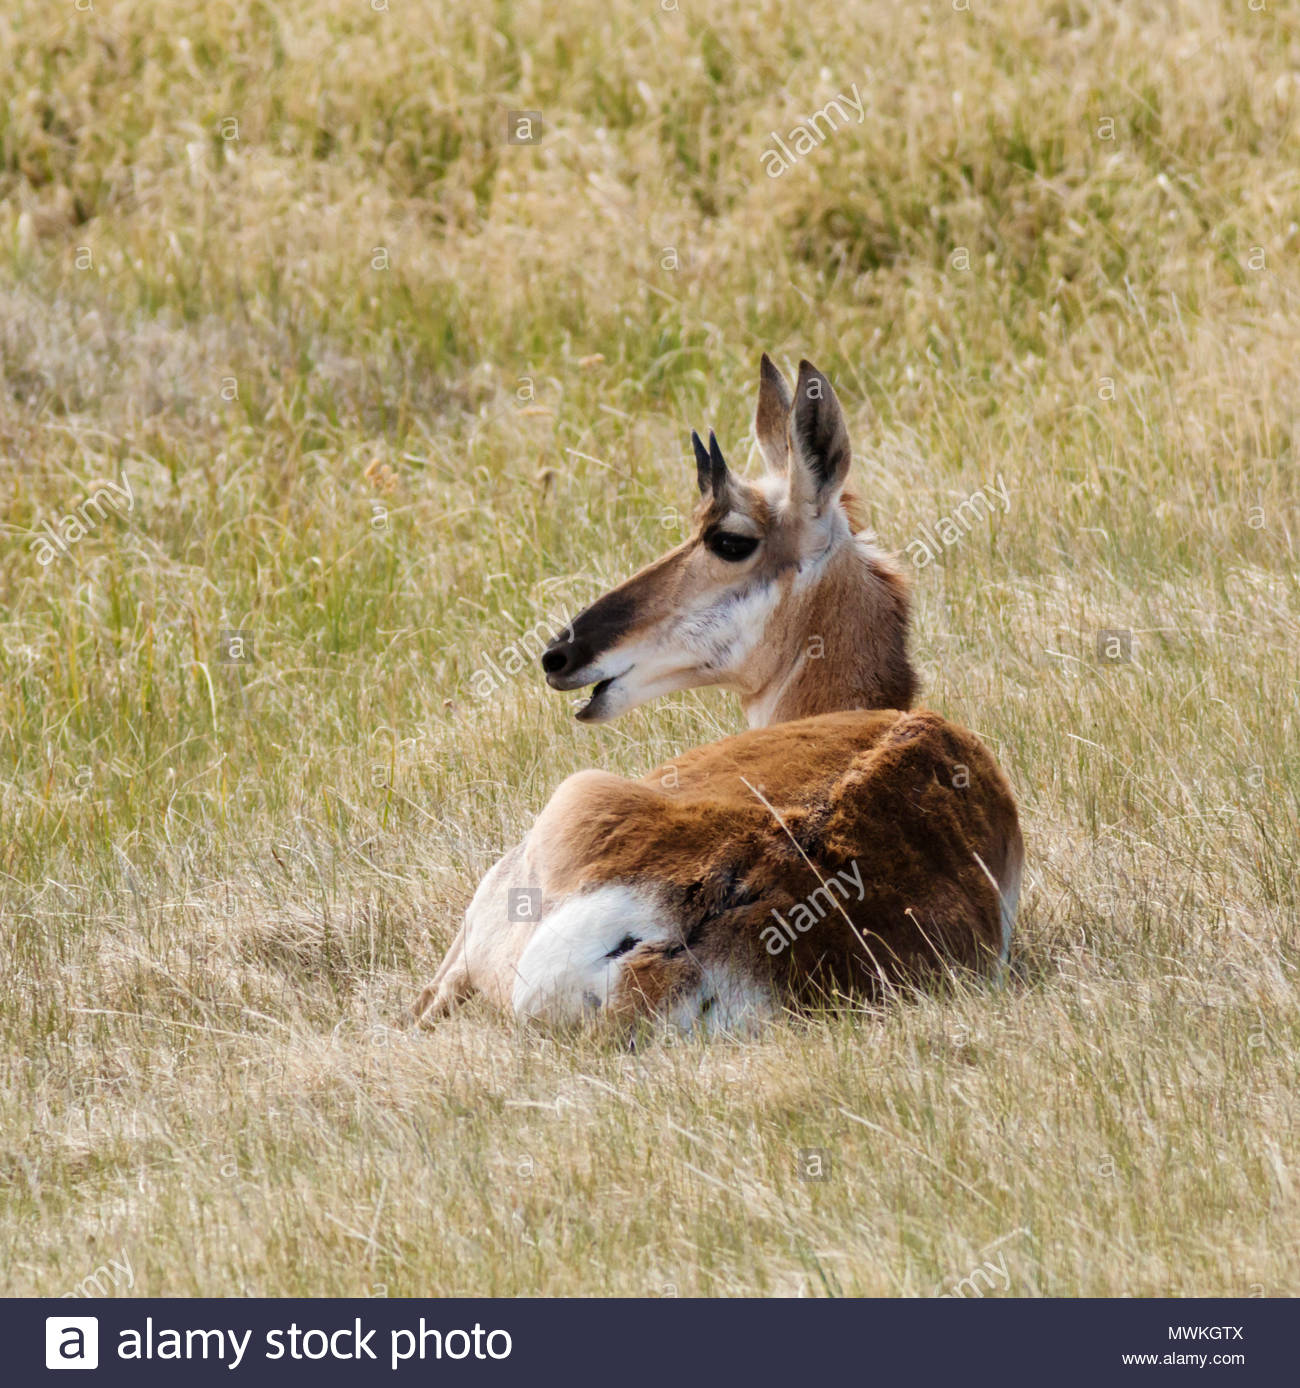 pronghorn-antilocapra-americana-doe-resting-in-grass-arizona-usa-MWKGTX.jpg